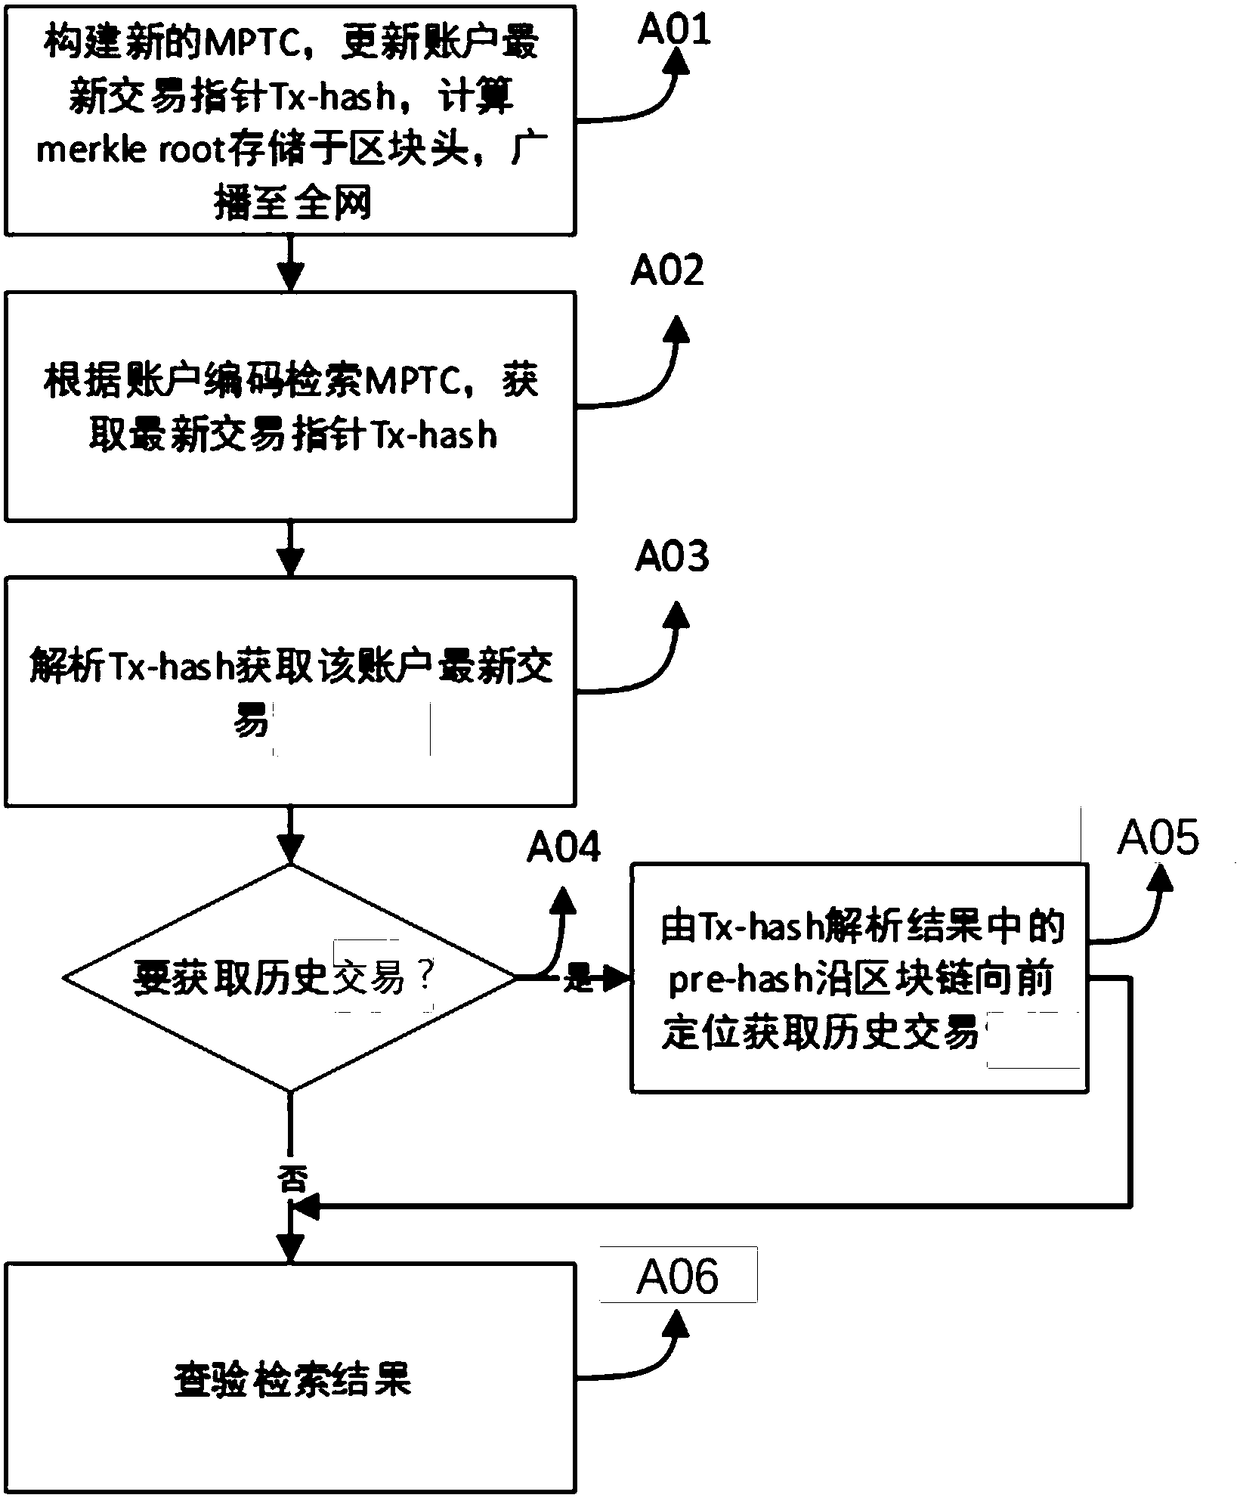 MPTC account state tree and fast retrieval method of MPTC block-chain